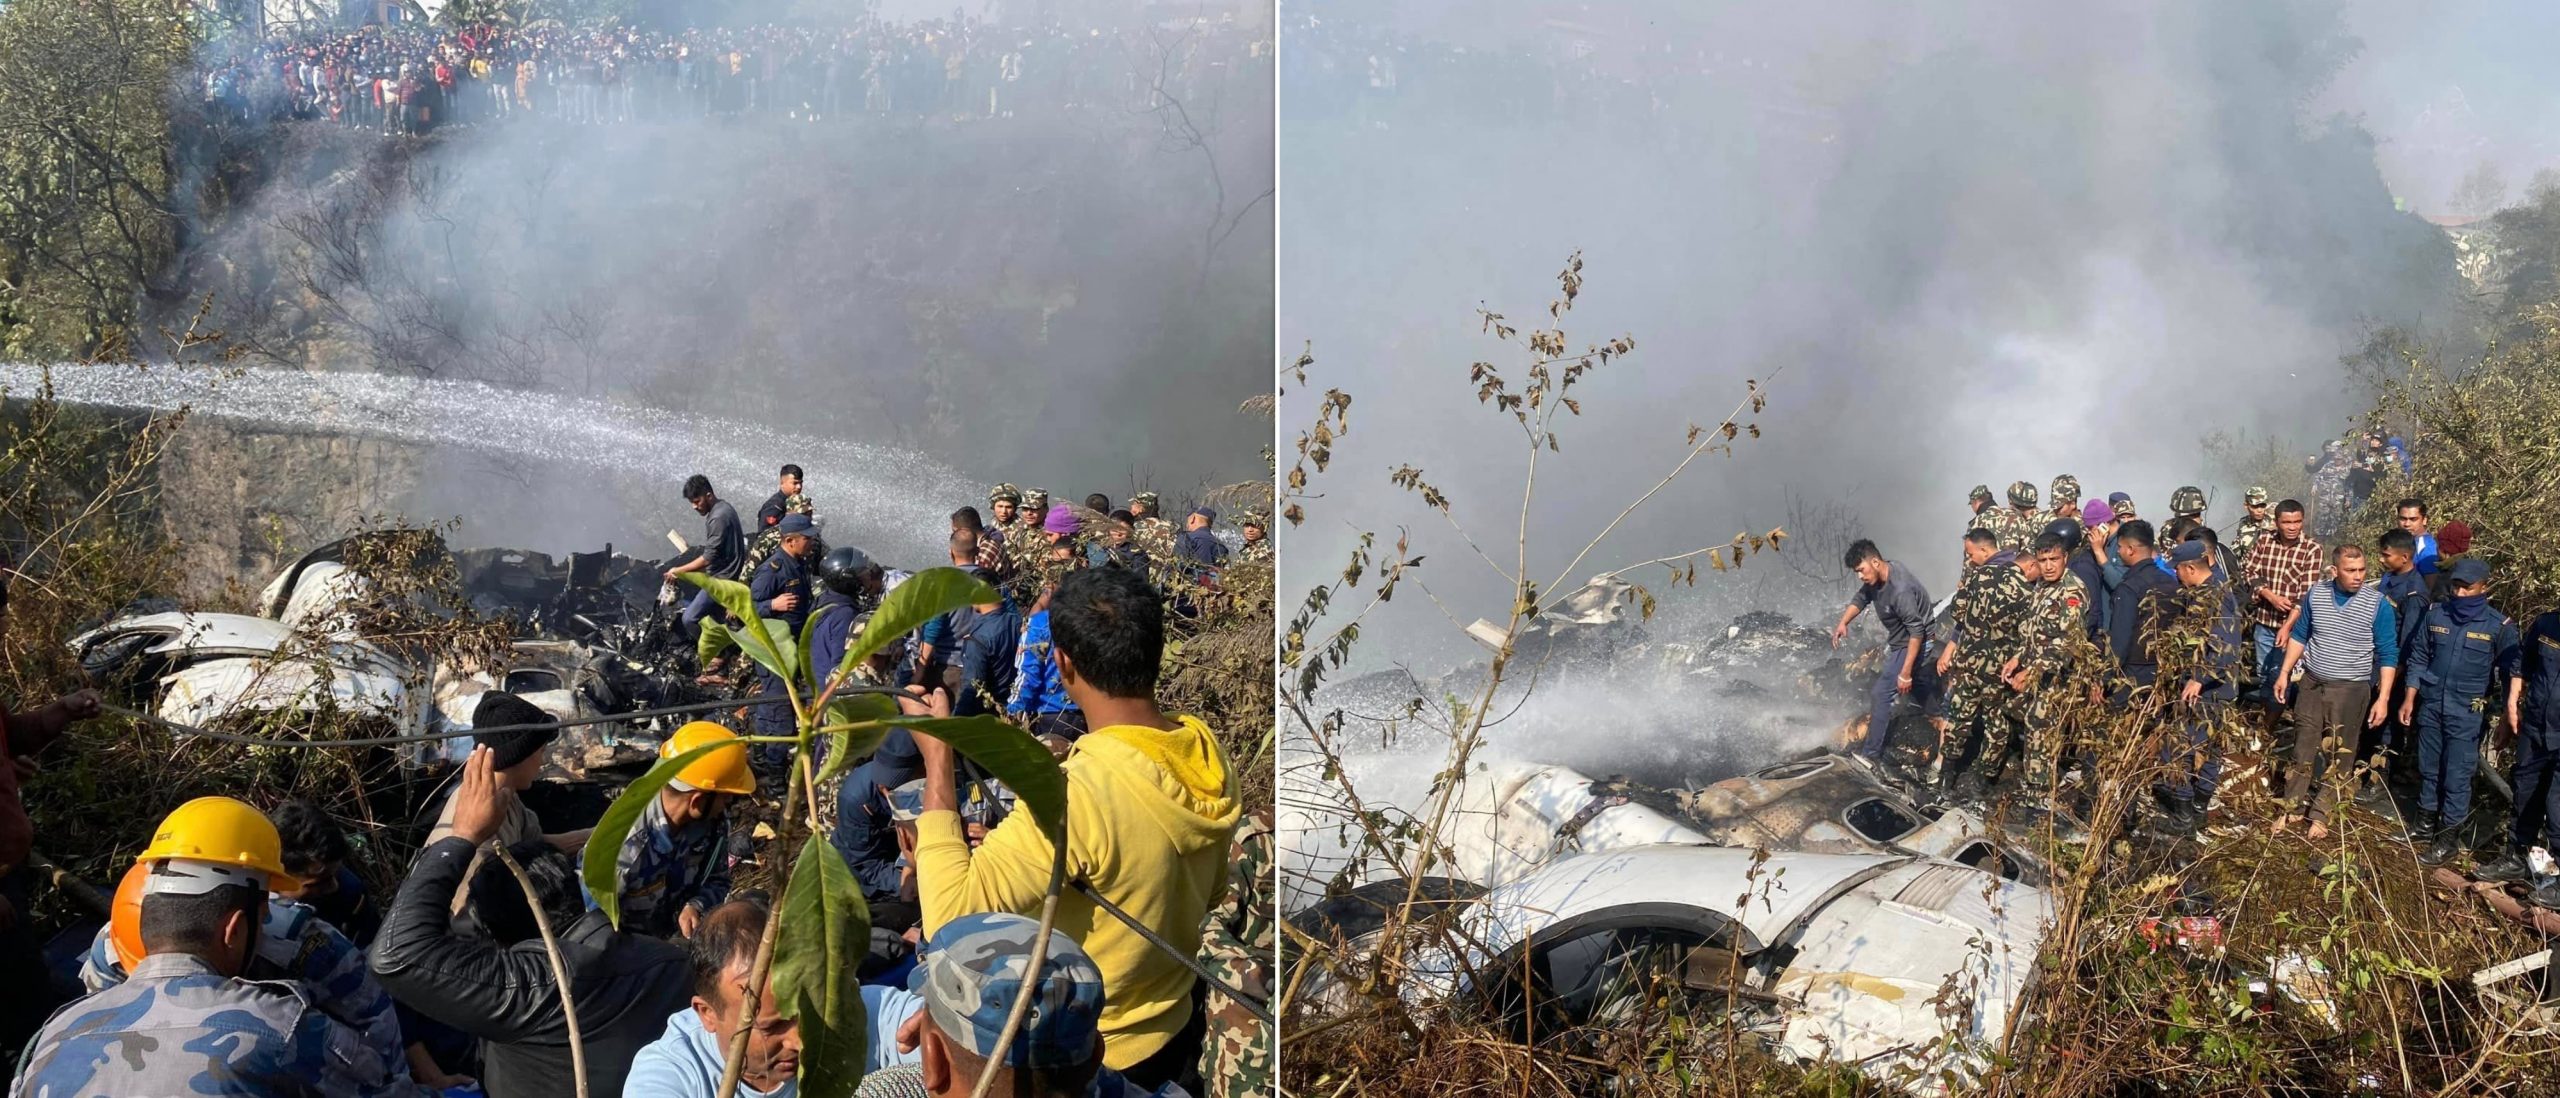 Plane crash update: 16 bodies recovered